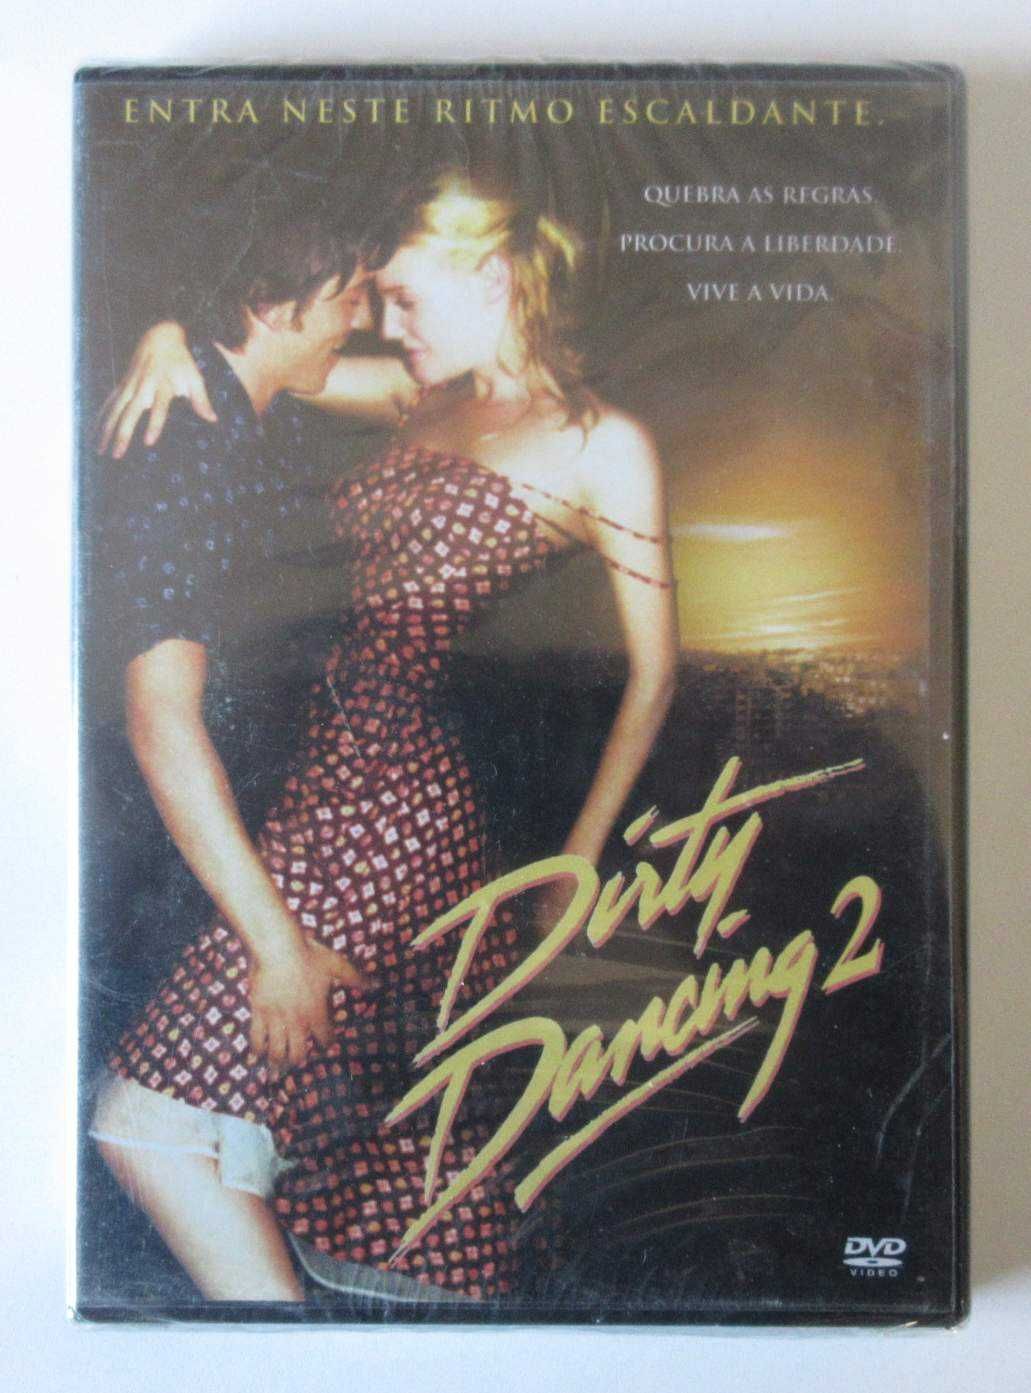 Dirty Dancing 2 (DVD NOVO / SELADO)